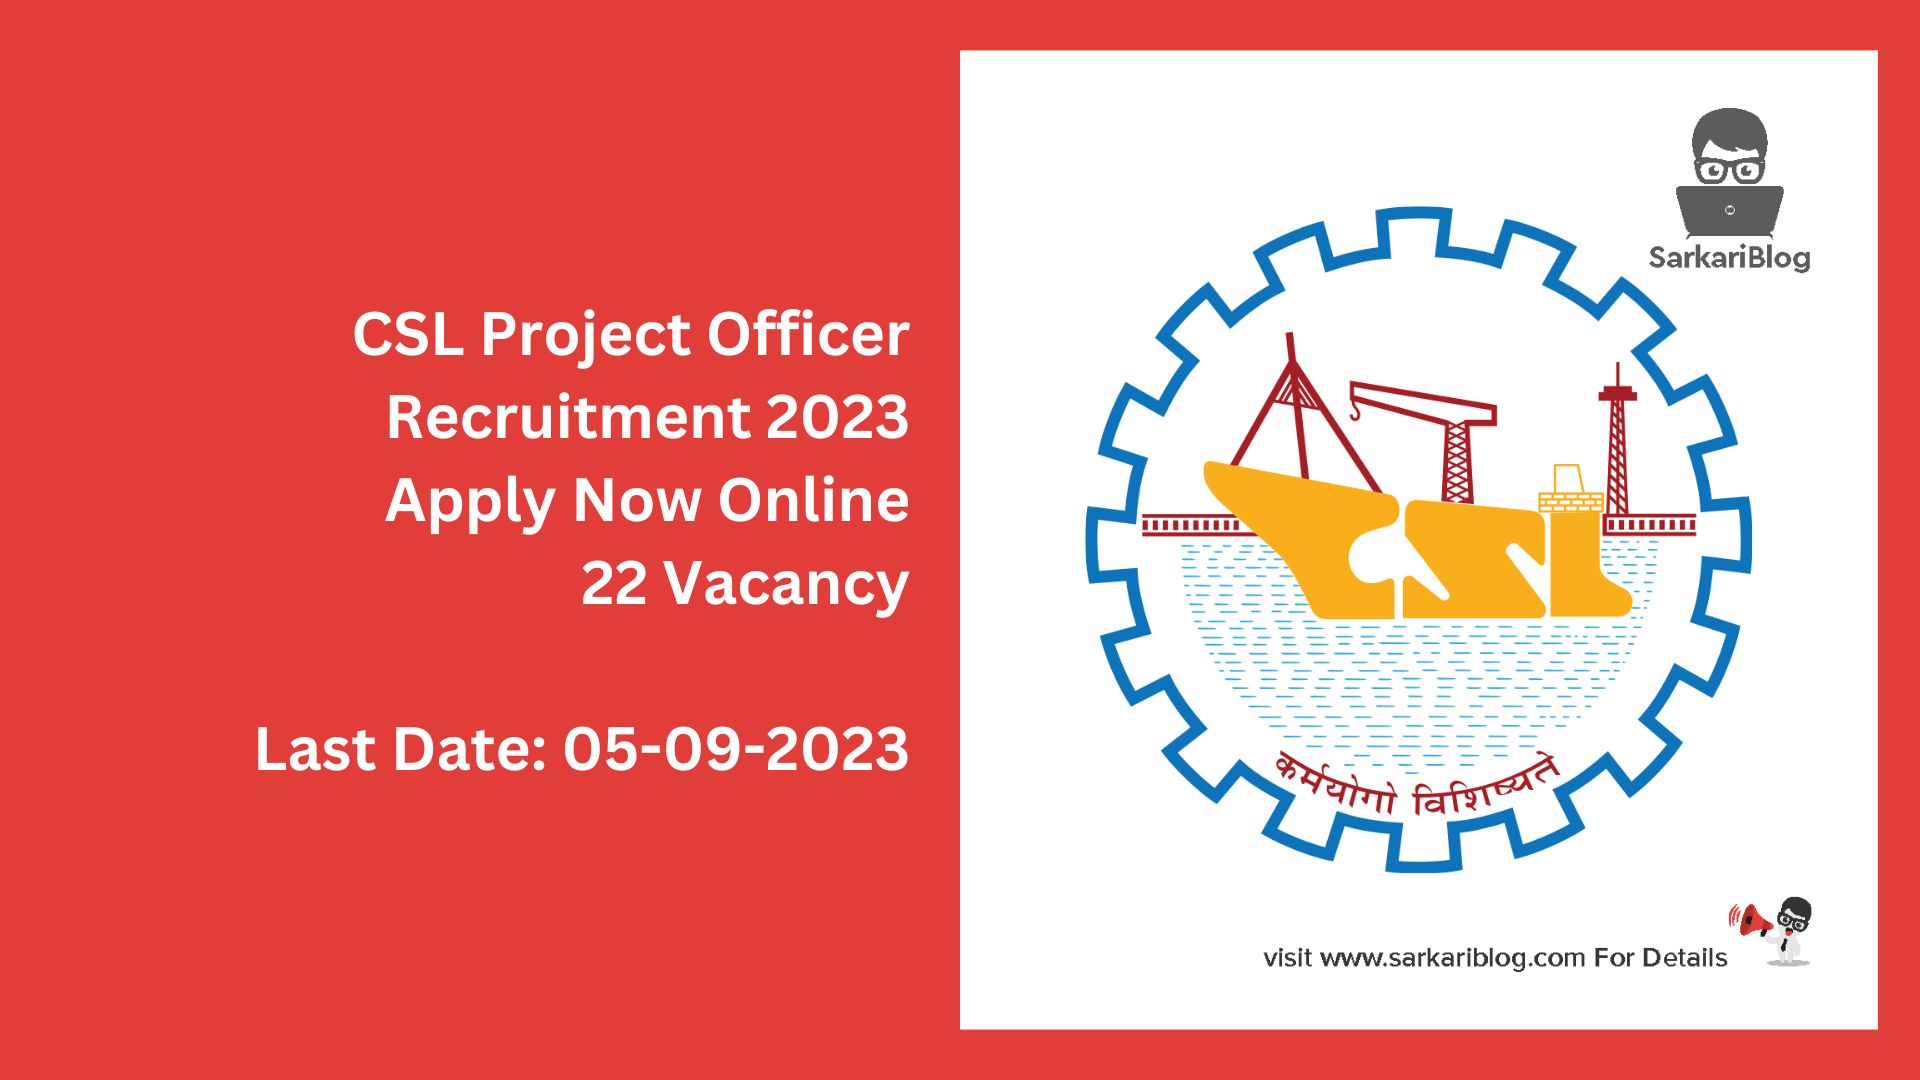 CSL Project Officer Recruitment 2023